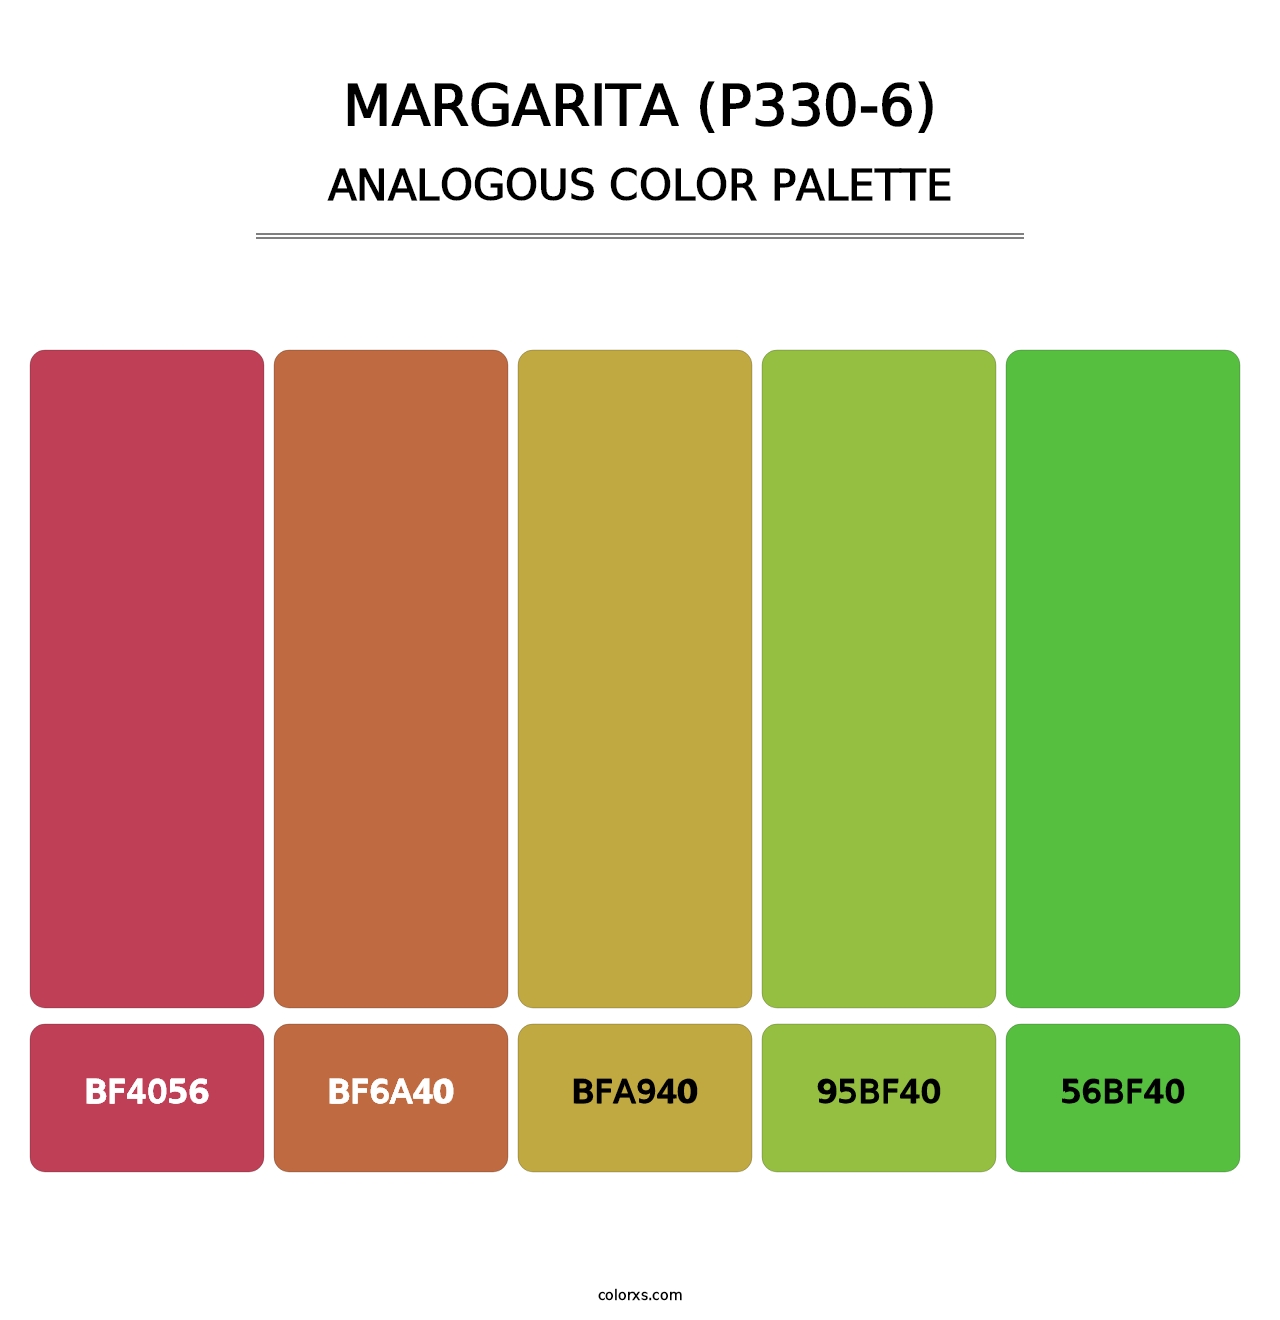 Margarita (P330-6) - Analogous Color Palette